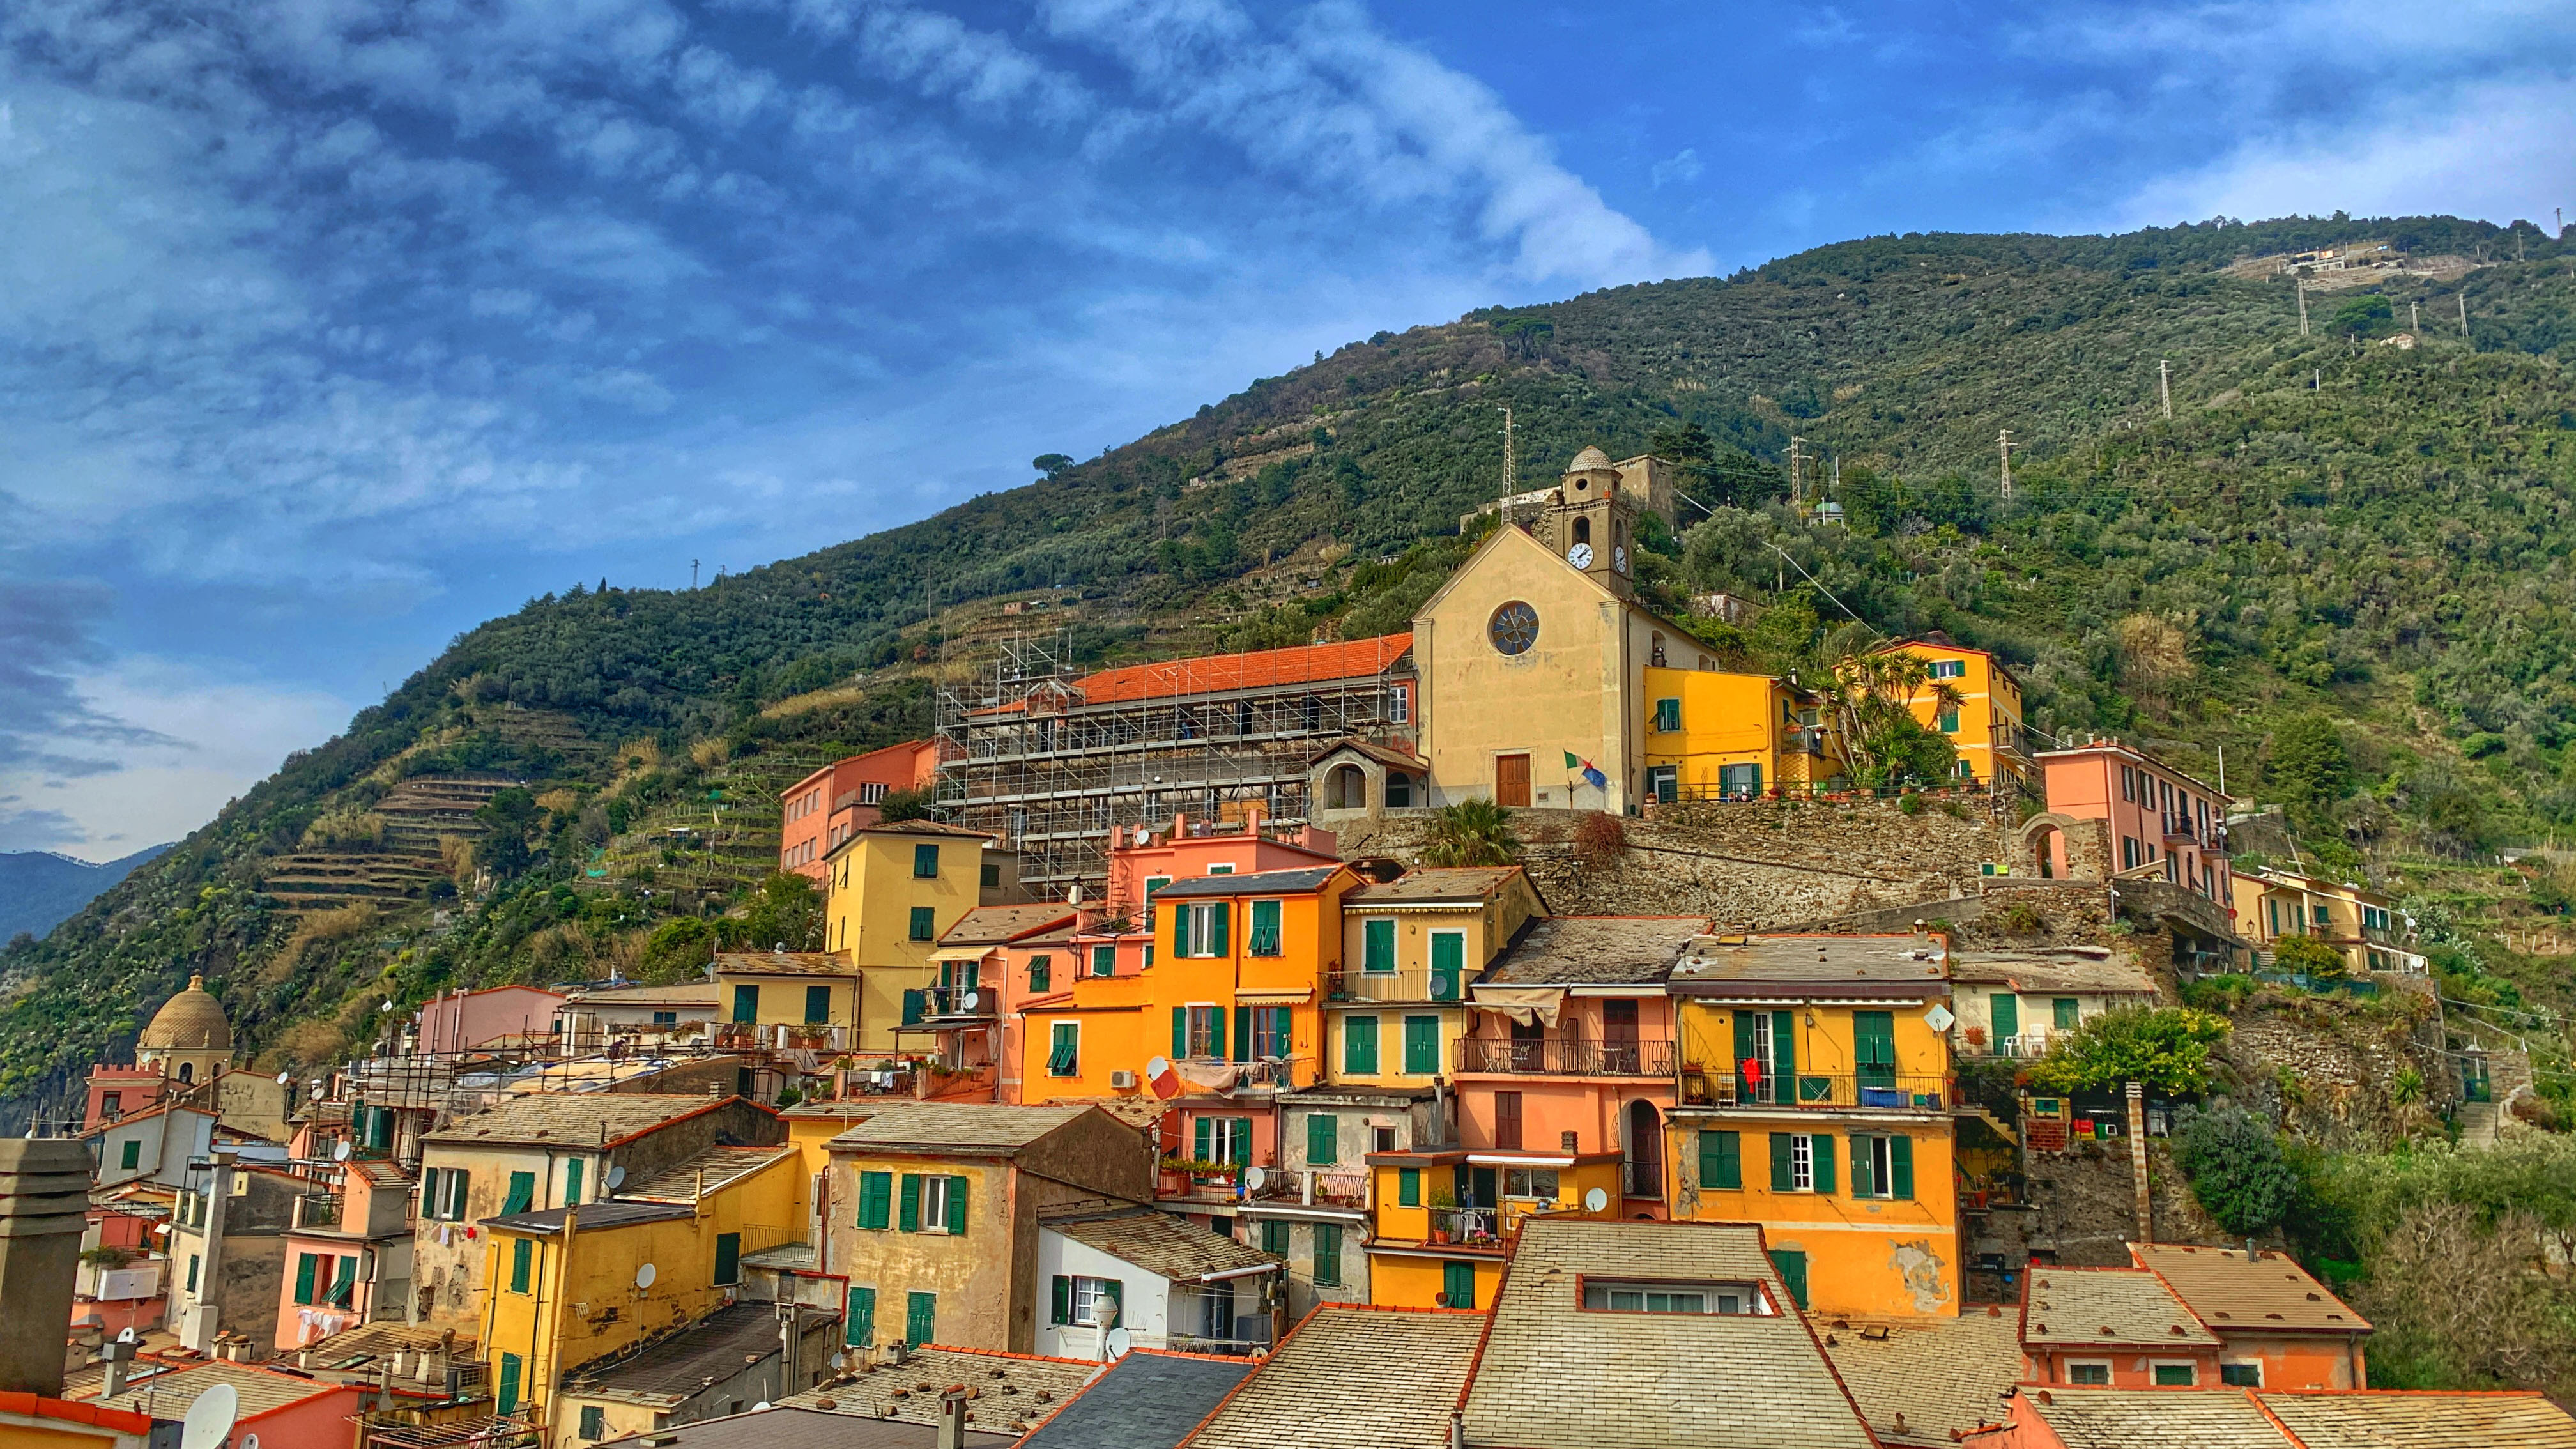 Landscape Image of Cinque Terre Italy